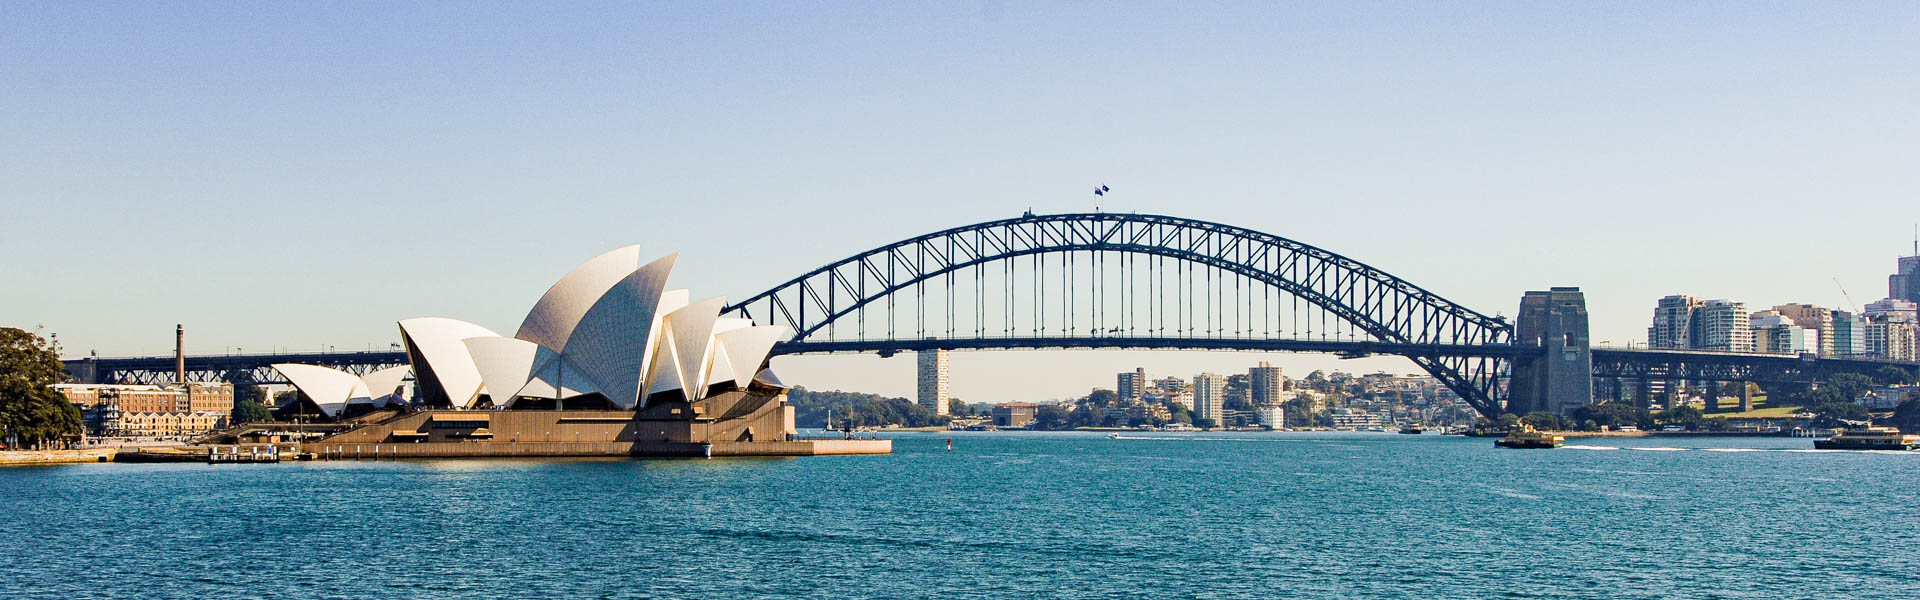 Opera House and Bay Bridge, Sydney, Australien